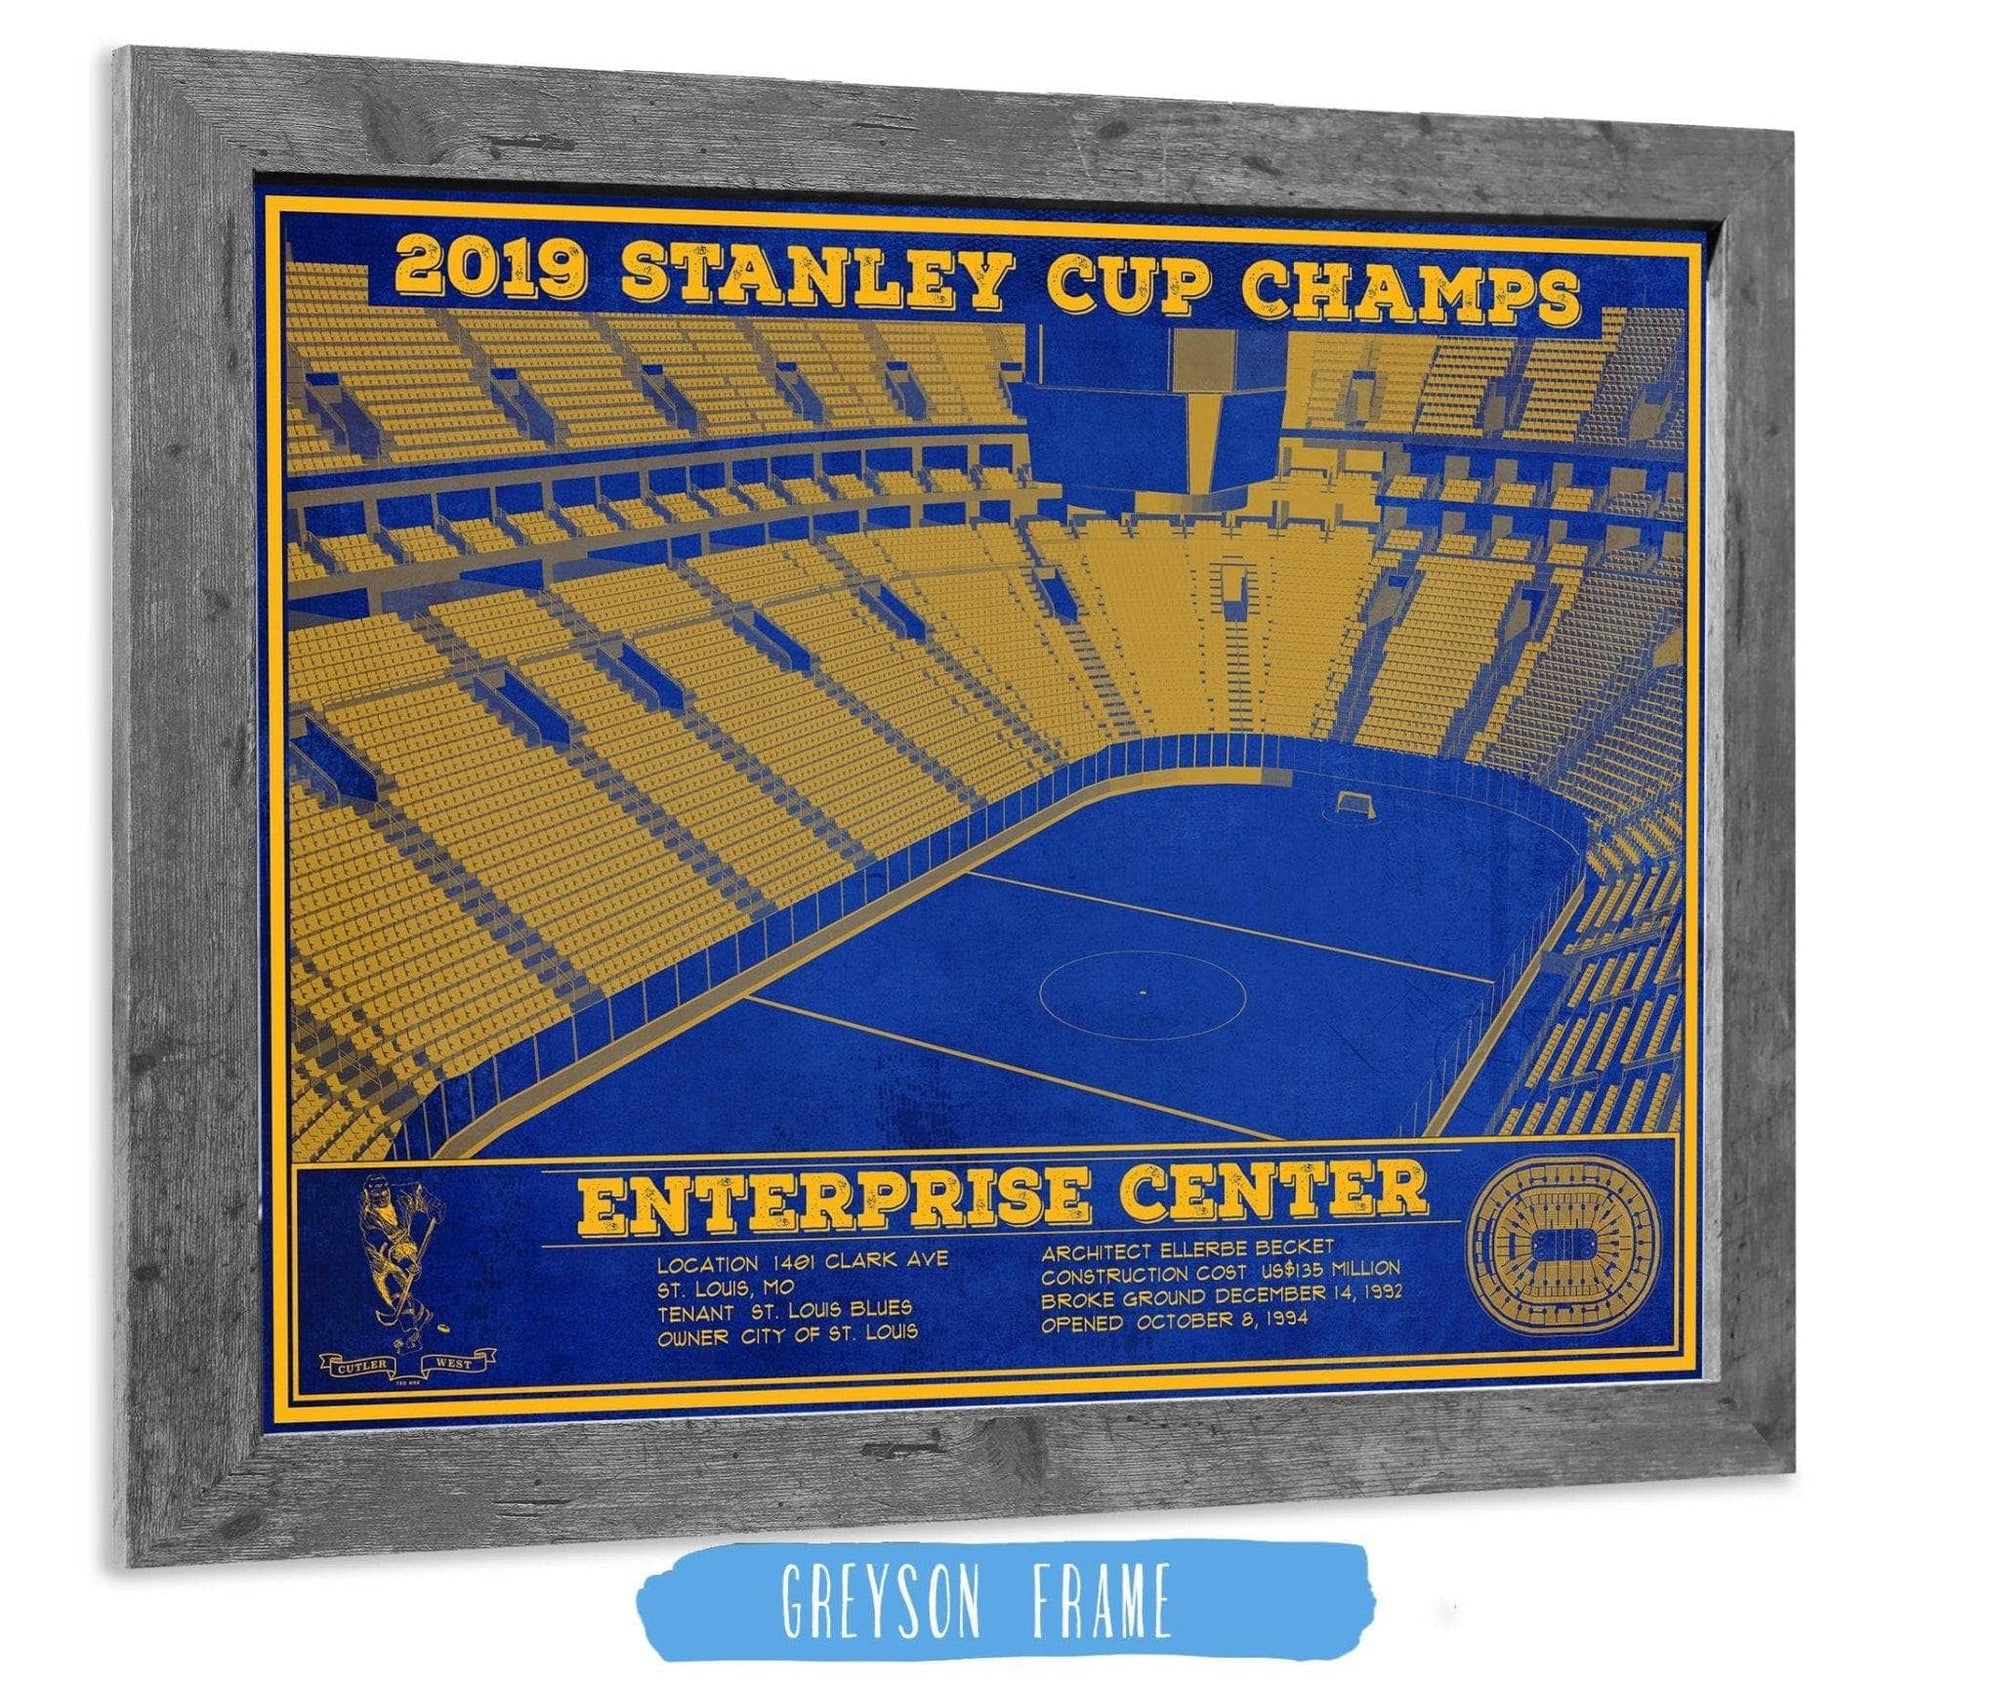 Cutler West 14" x 11" / Greyson Frame St. Louis Blues Enterprise 2019 Stanley Cup Champions - Vintage Hockey Team Color Print 659984130-TEAM